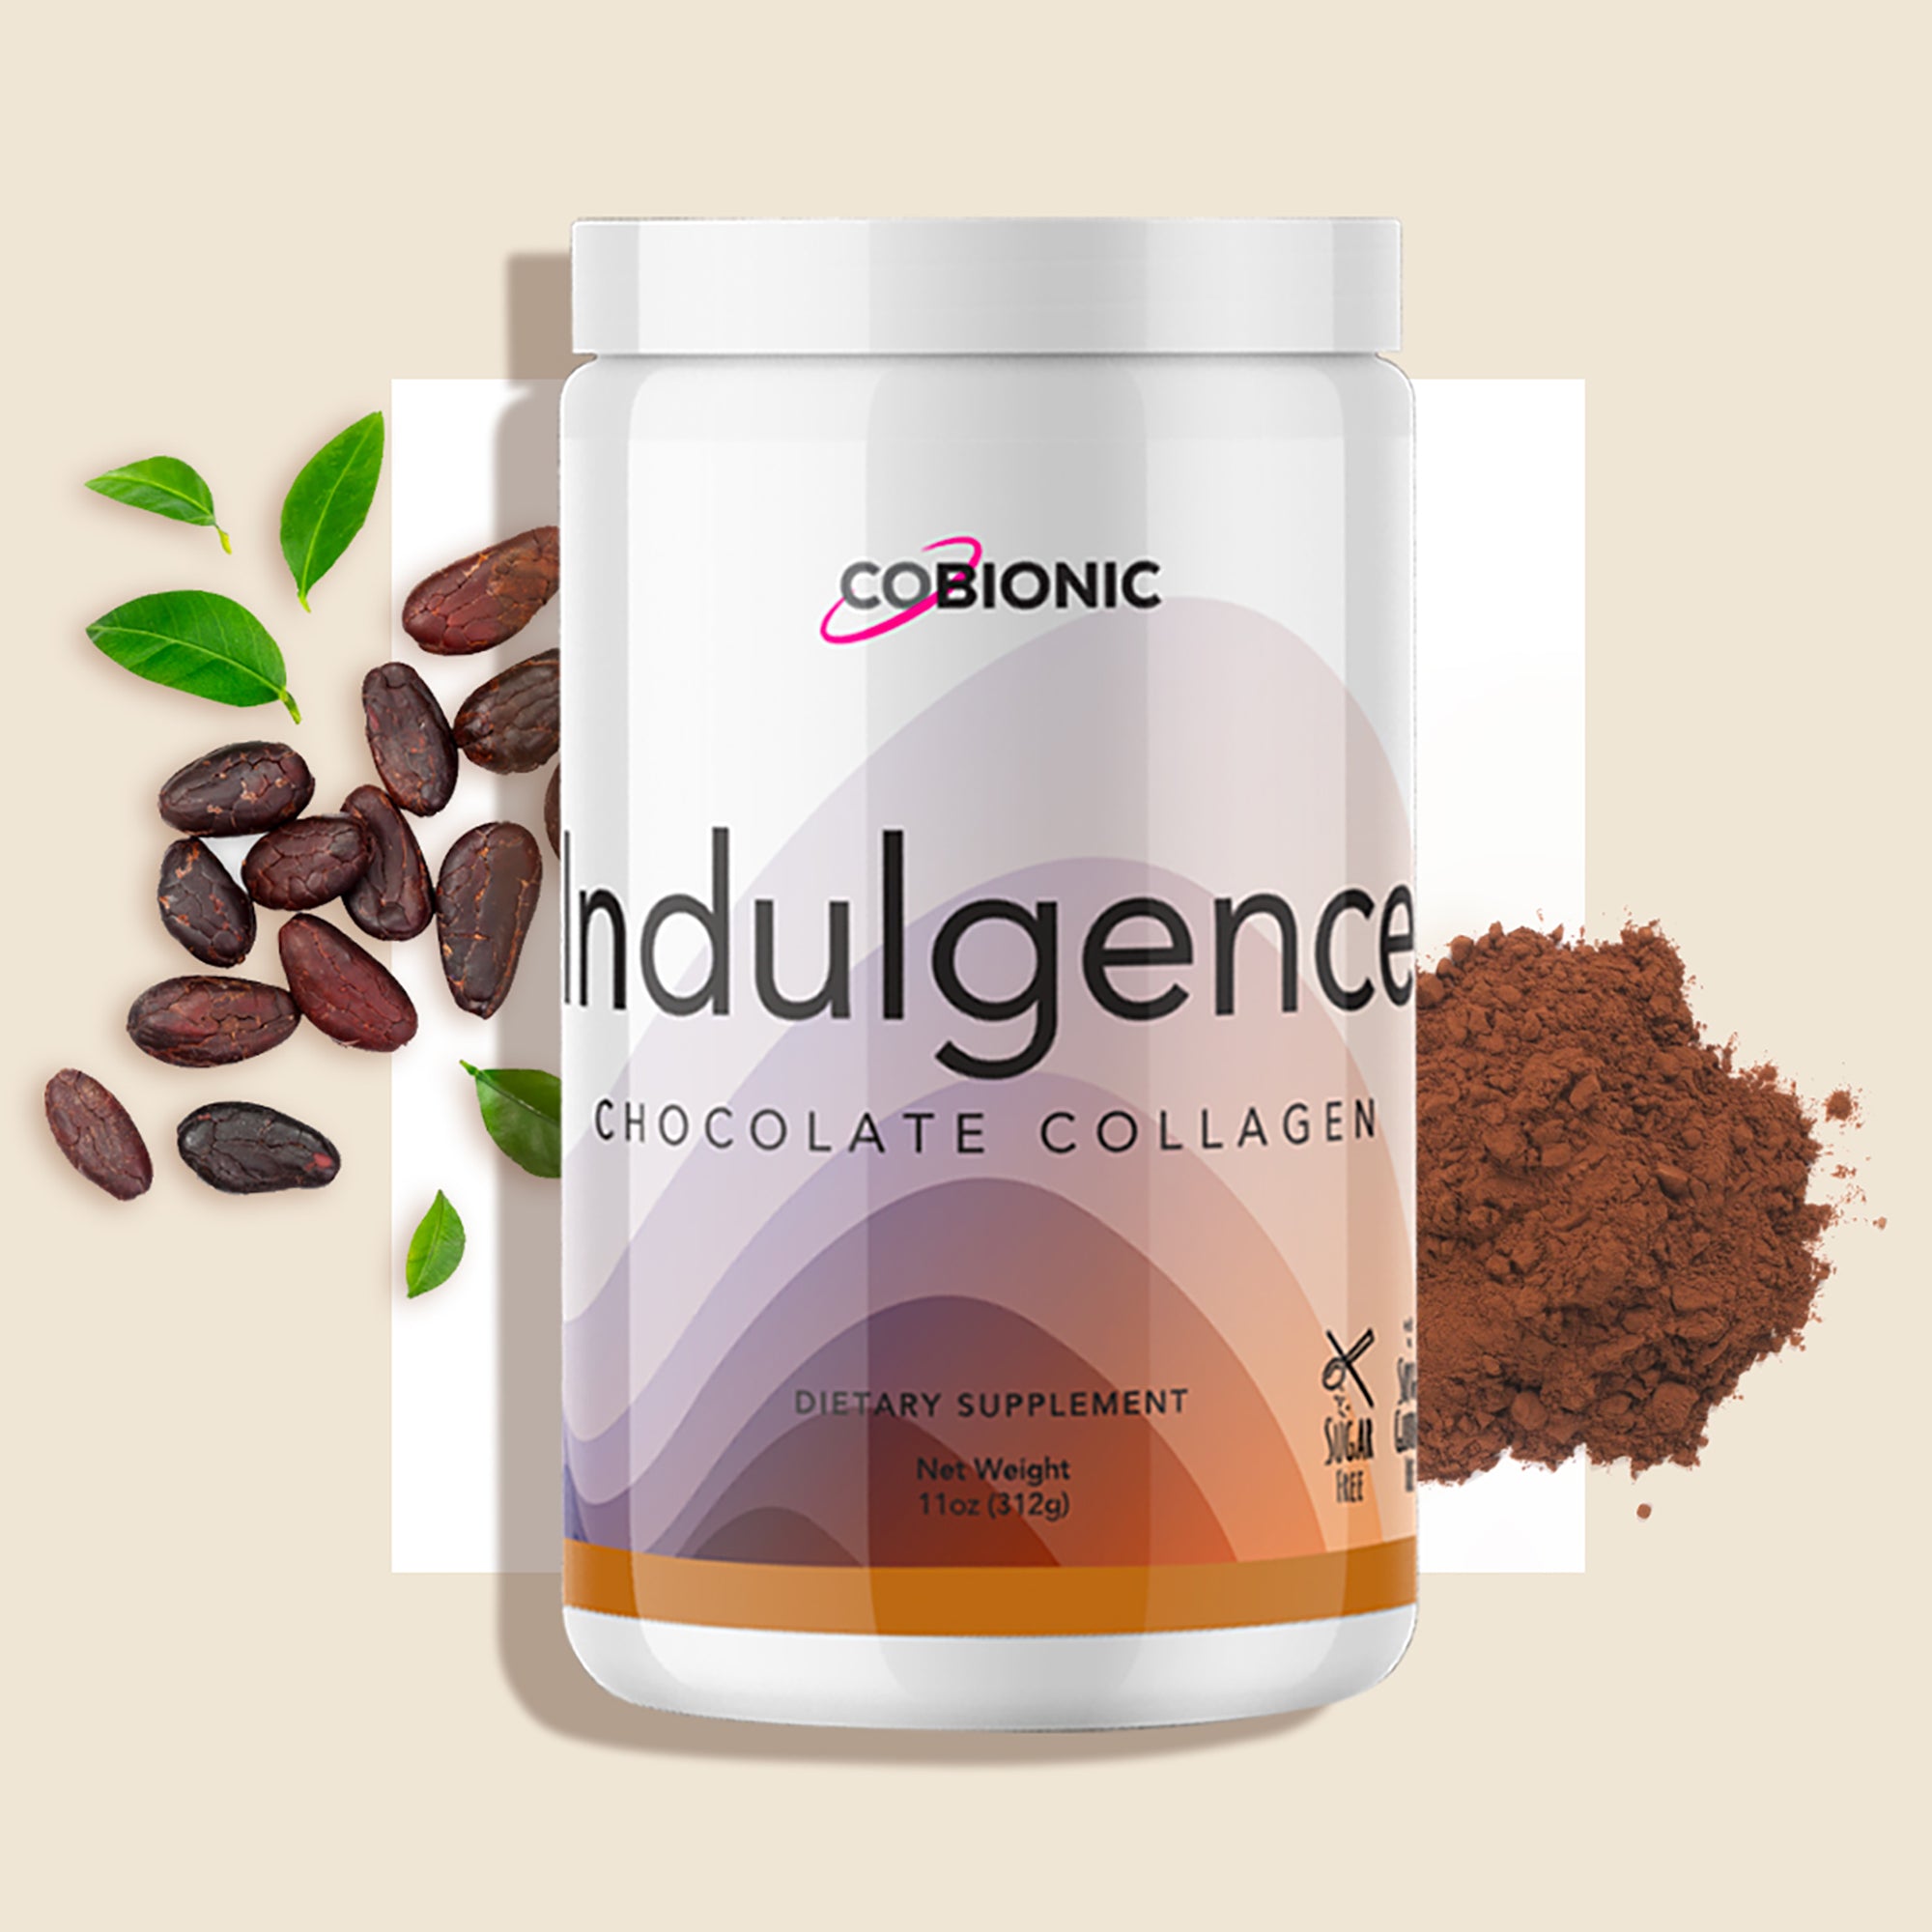 Indulgence Chocolate Collagen